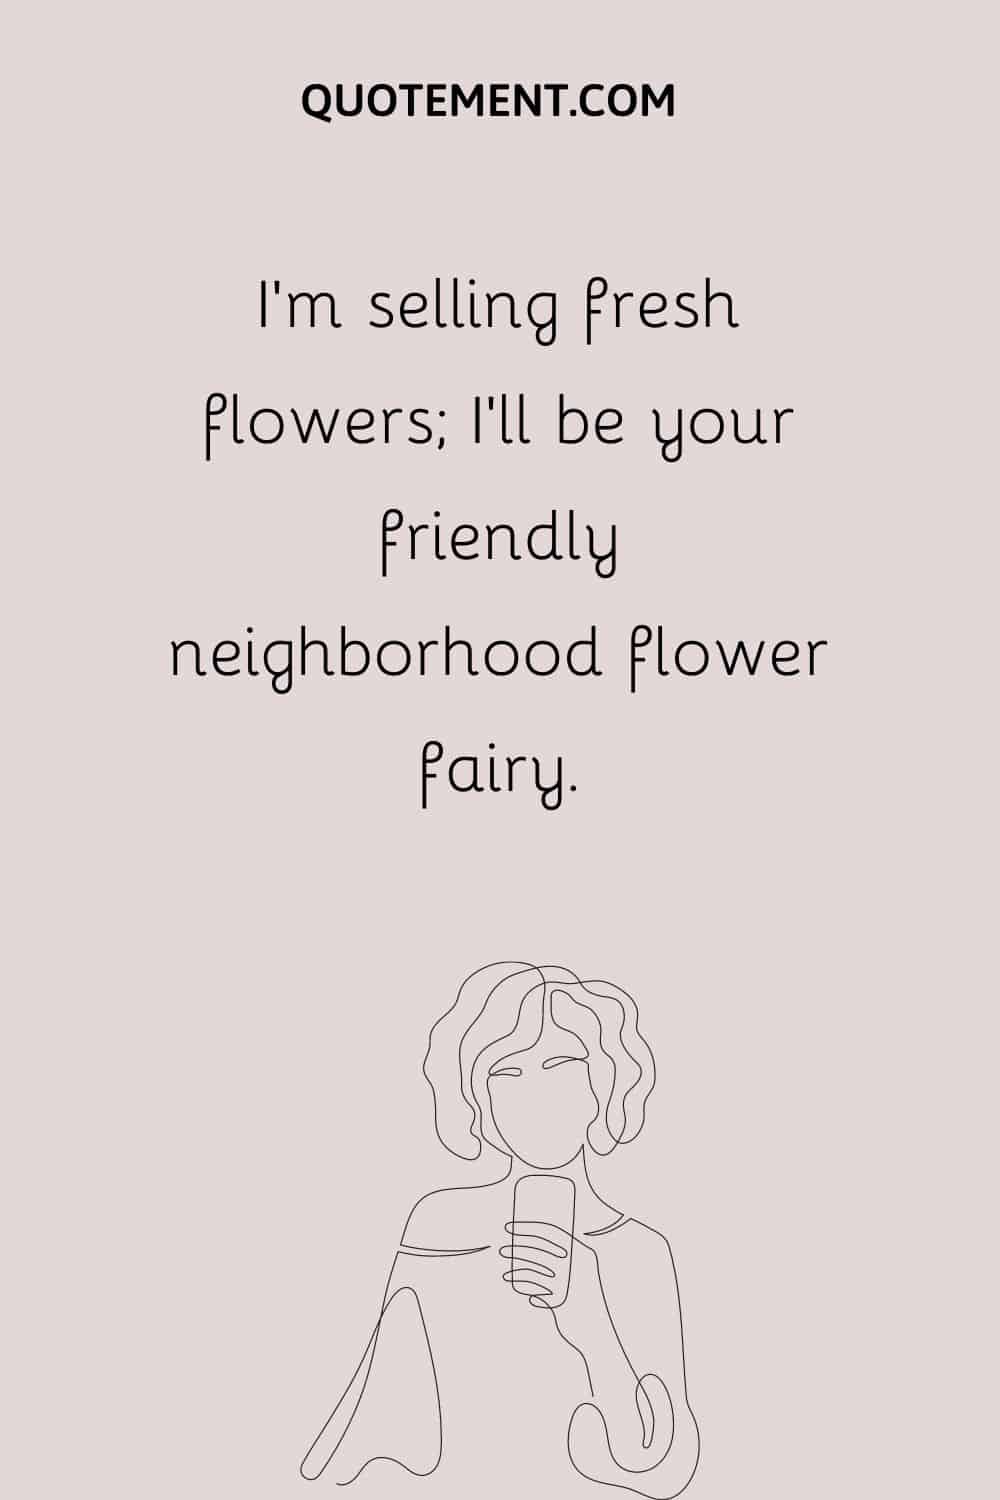 I’m selling fresh flowers; I’ll be your friendly neighborhood flower fairy.